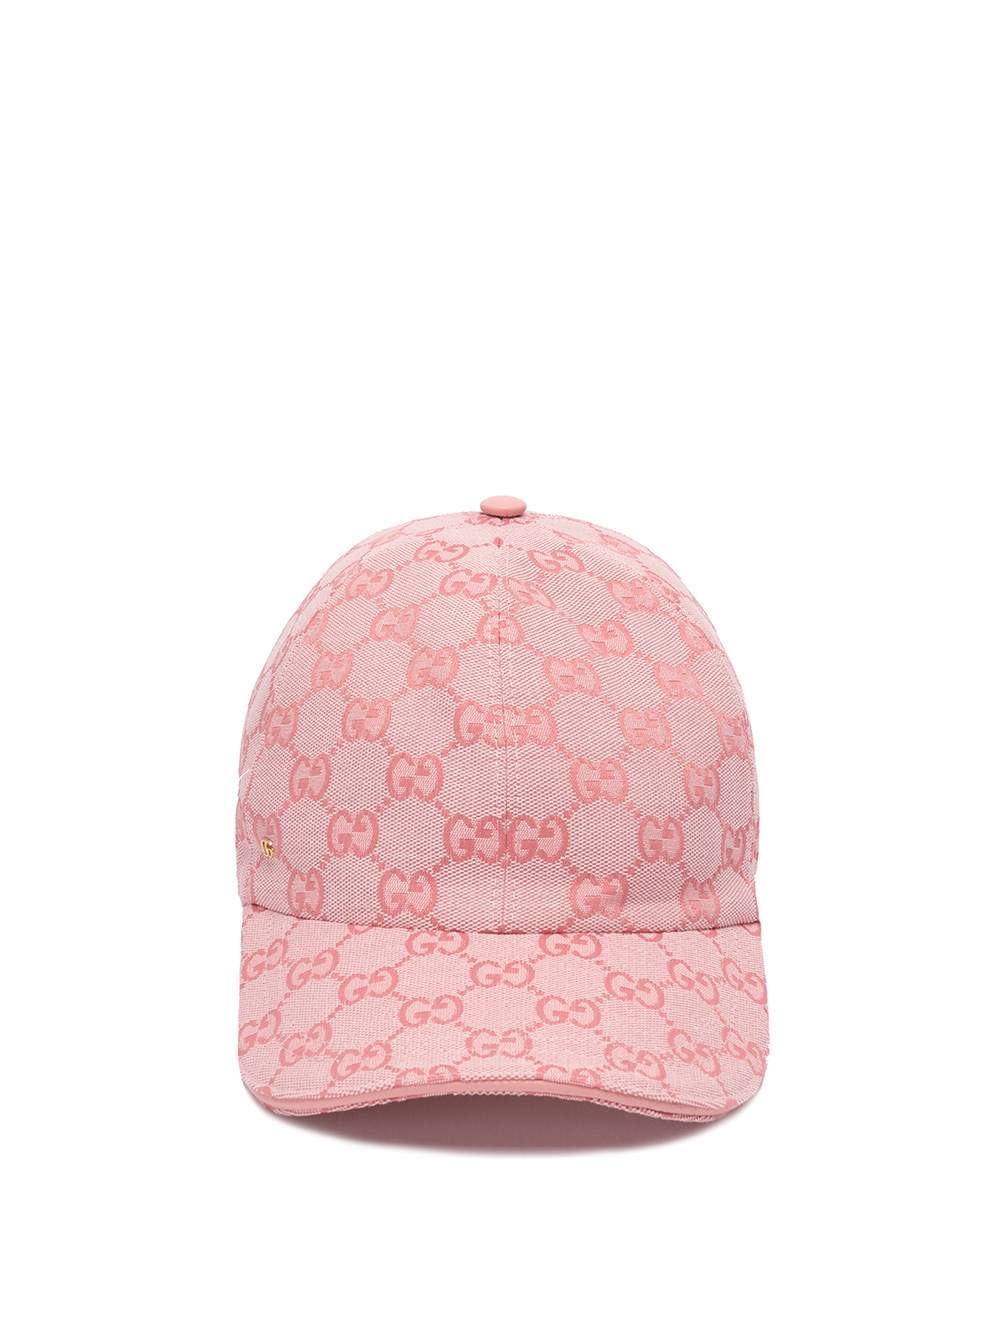 Gucci GG Canvas Baseball Hat, Size L, Pink